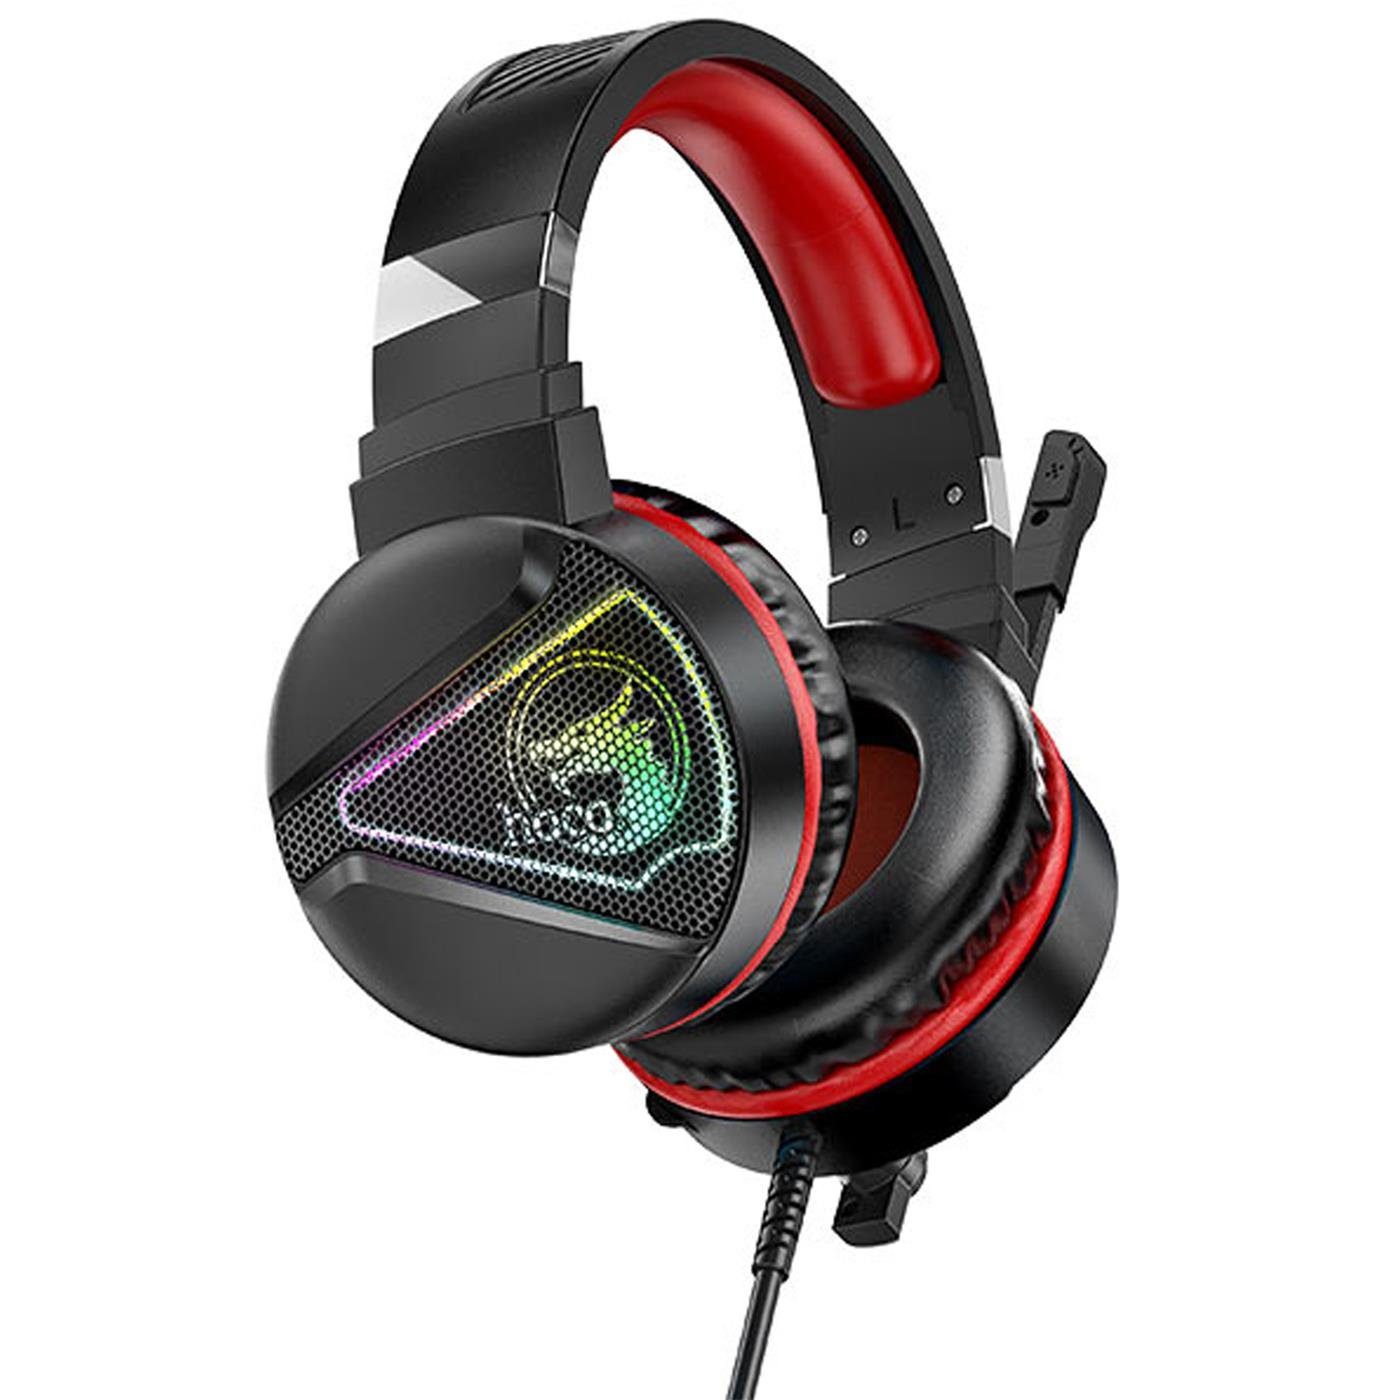 LED Beleuchtung) W104 Gaming PC-Headset und Mikrofon Kopfhörer (Stylische Rot Stereo mit Gaming HOCO